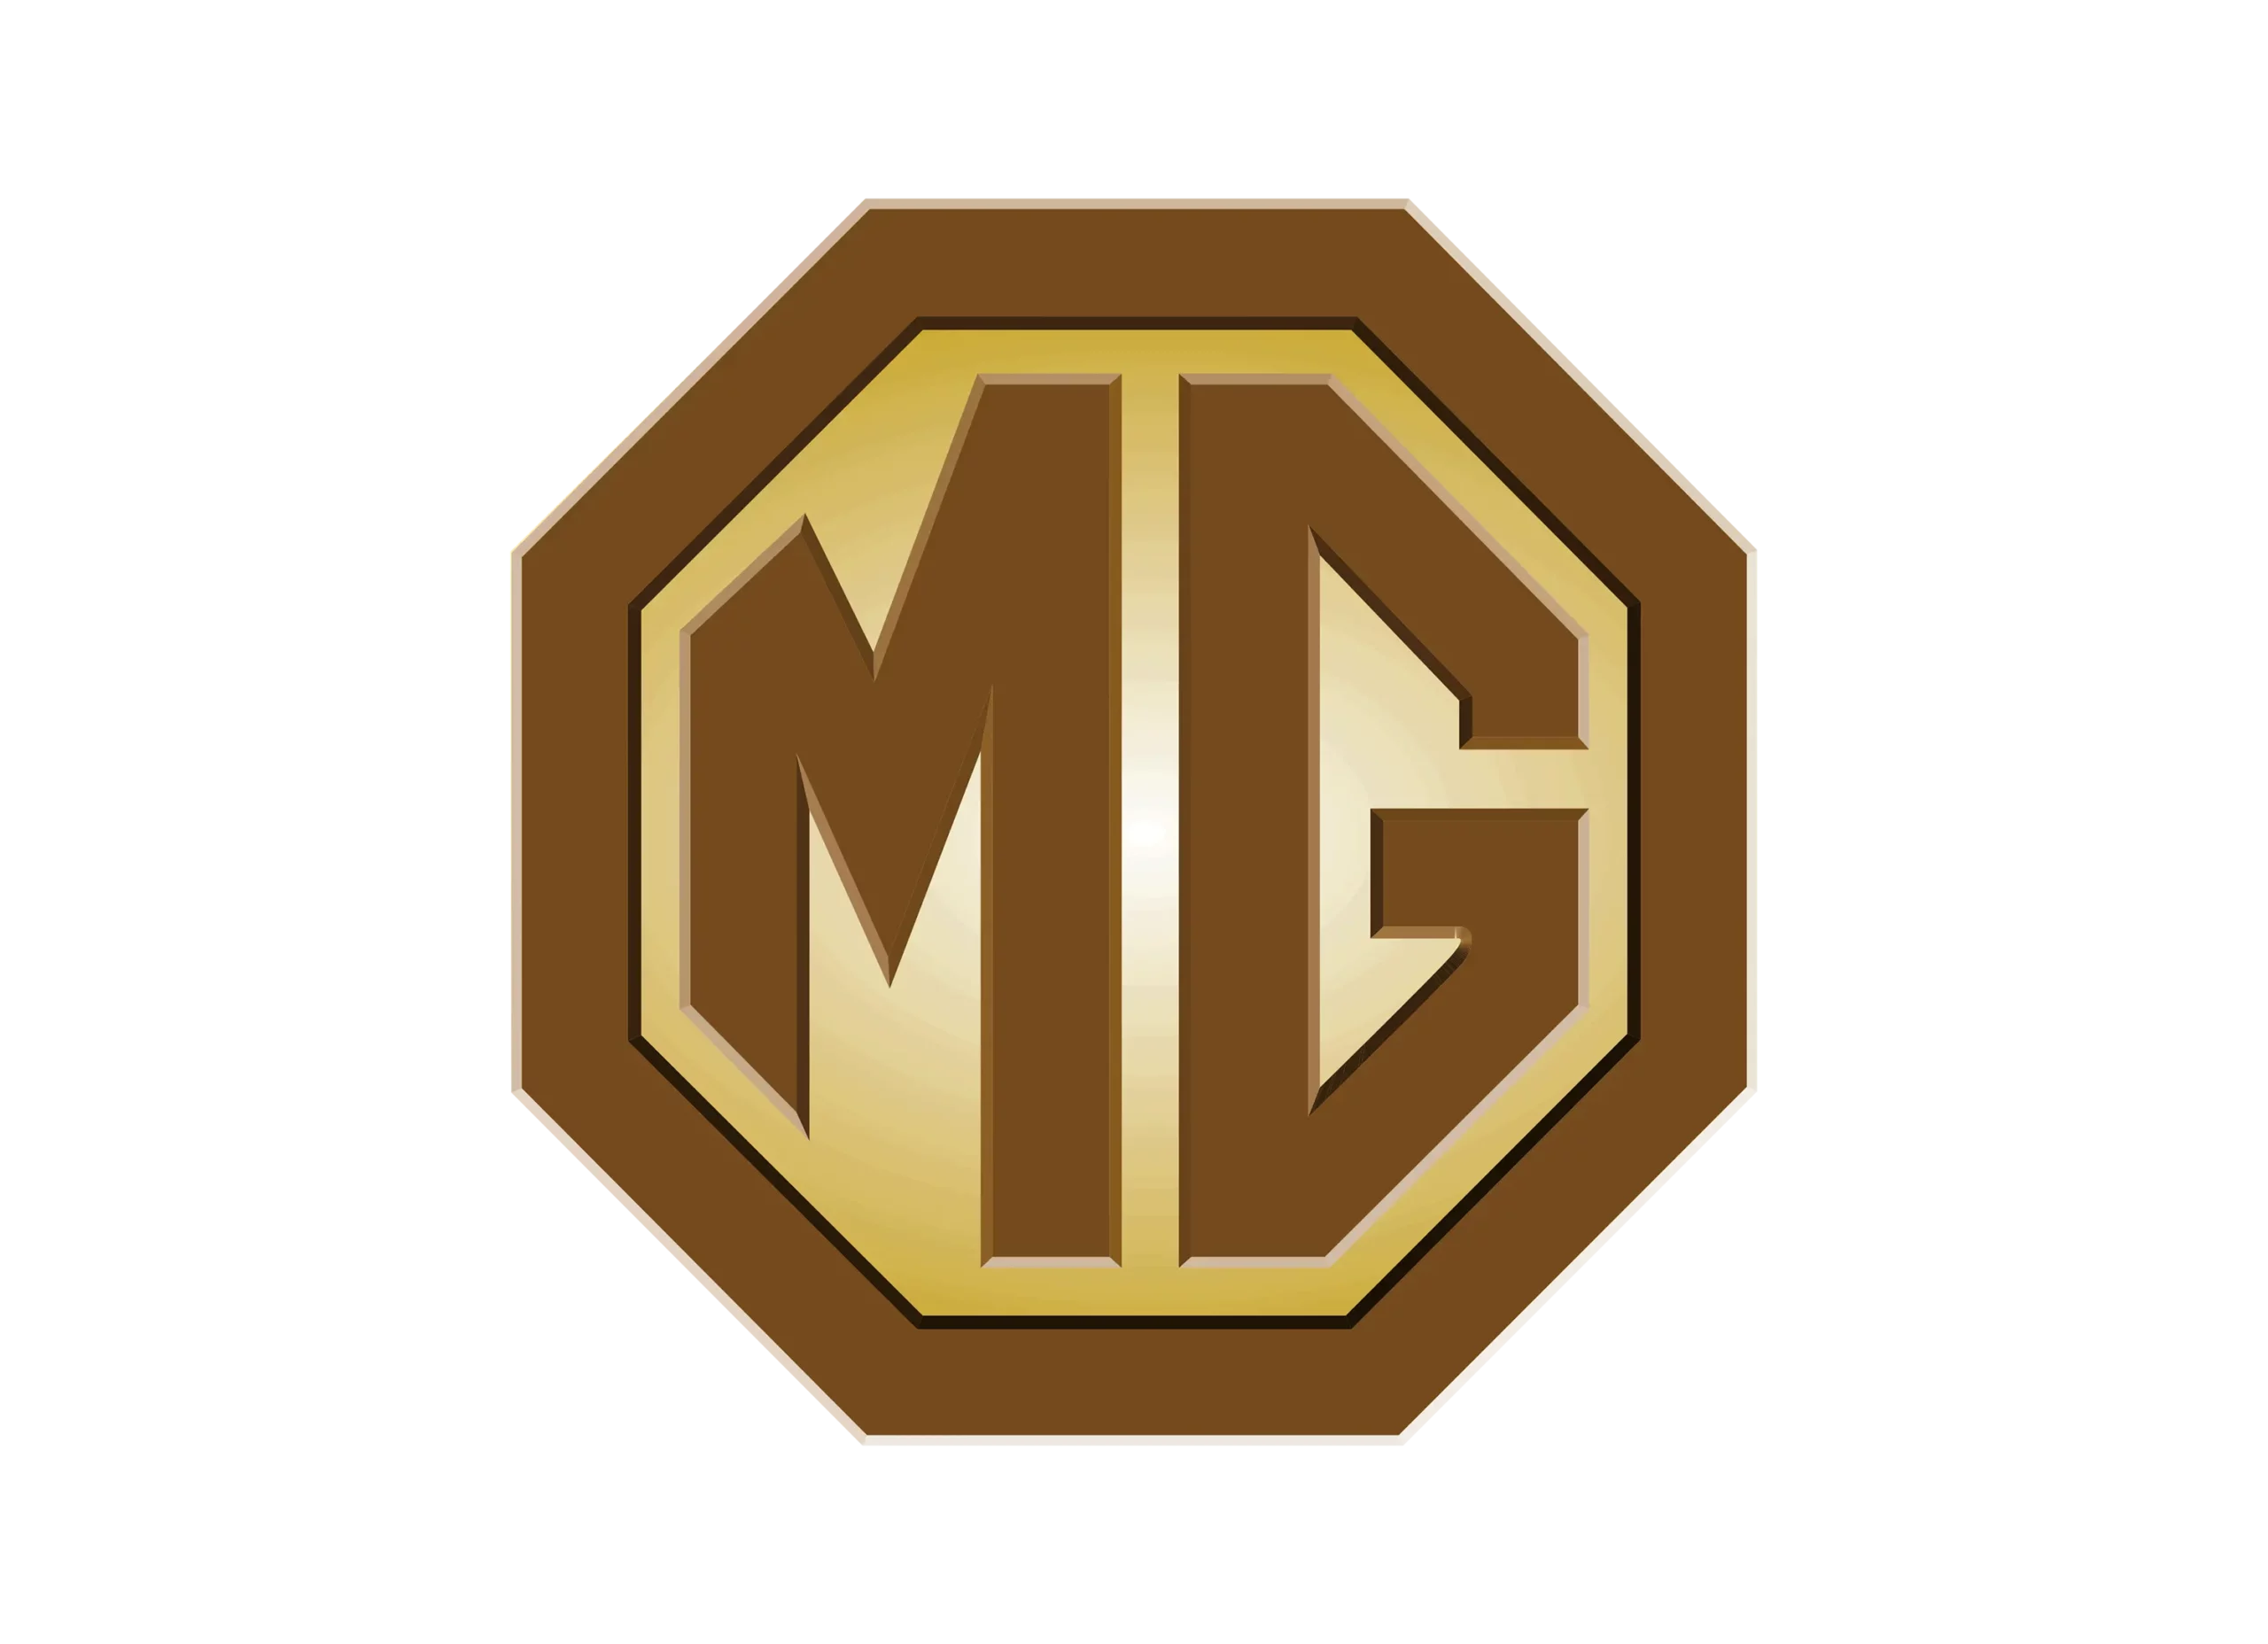 MG logo 1927-1952